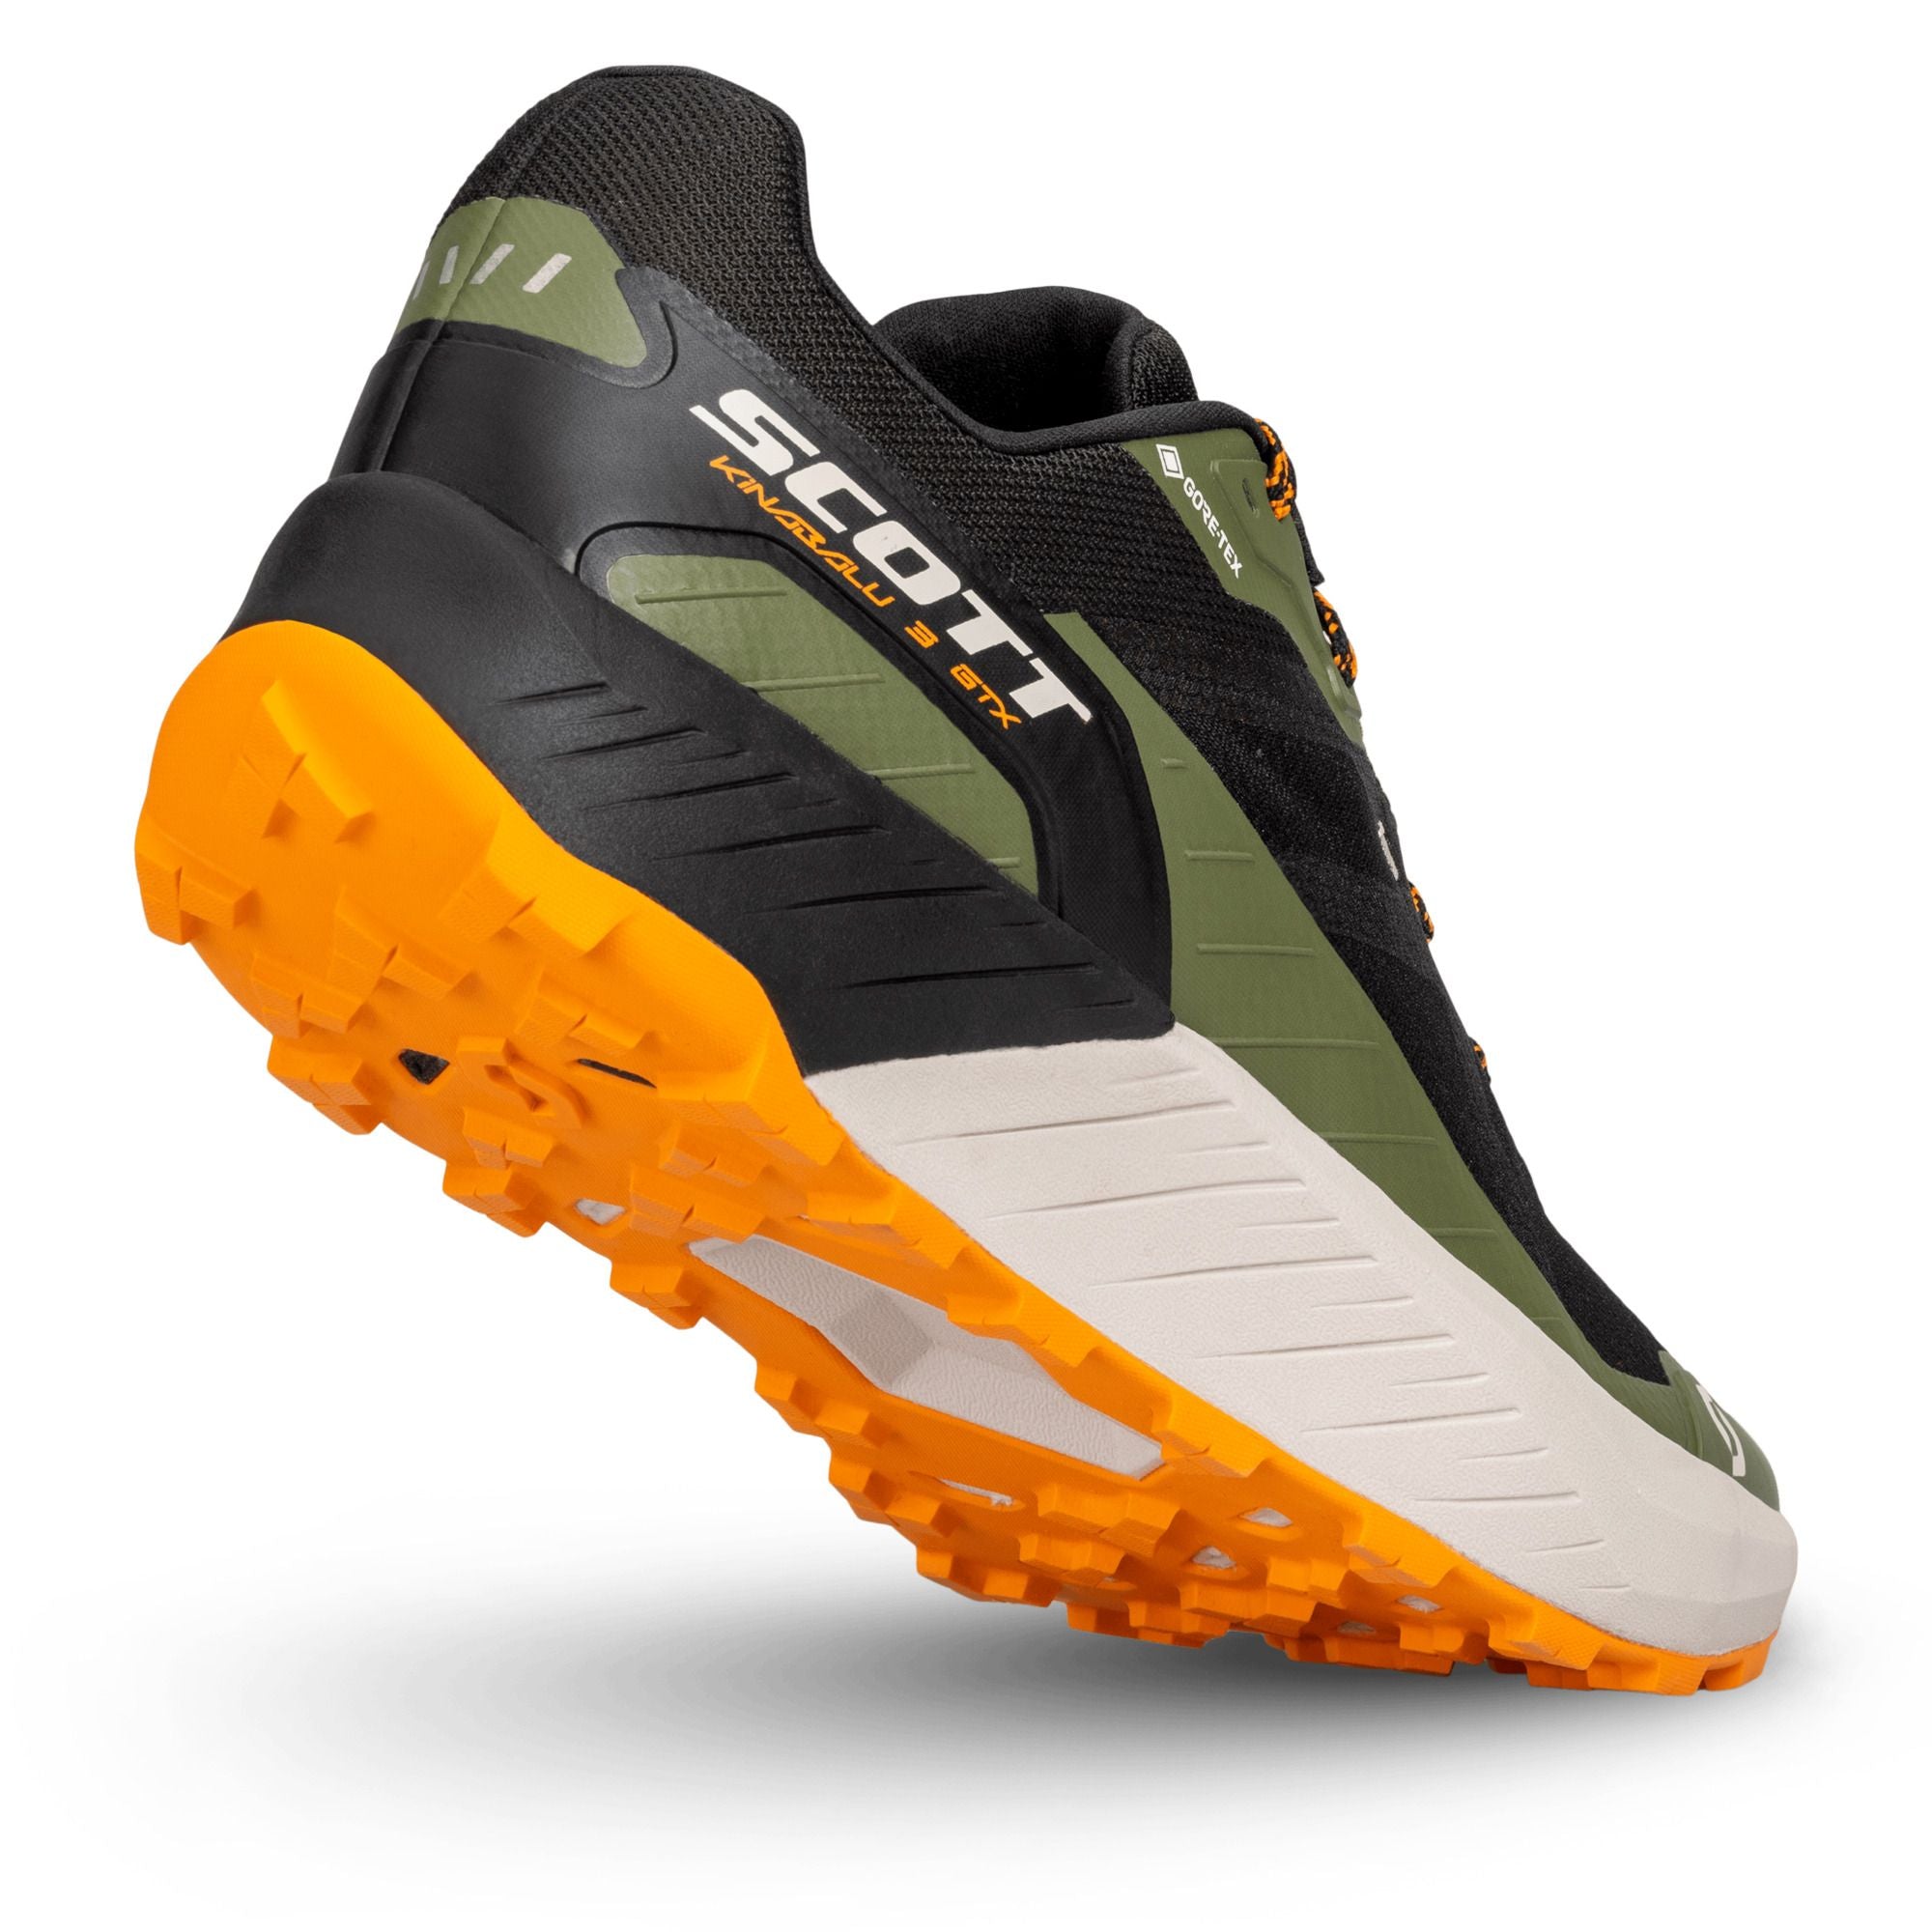 Scott Men's Kinabalu 3 GTX Trail Running Shoes Black/Flash Orange US 8.5 